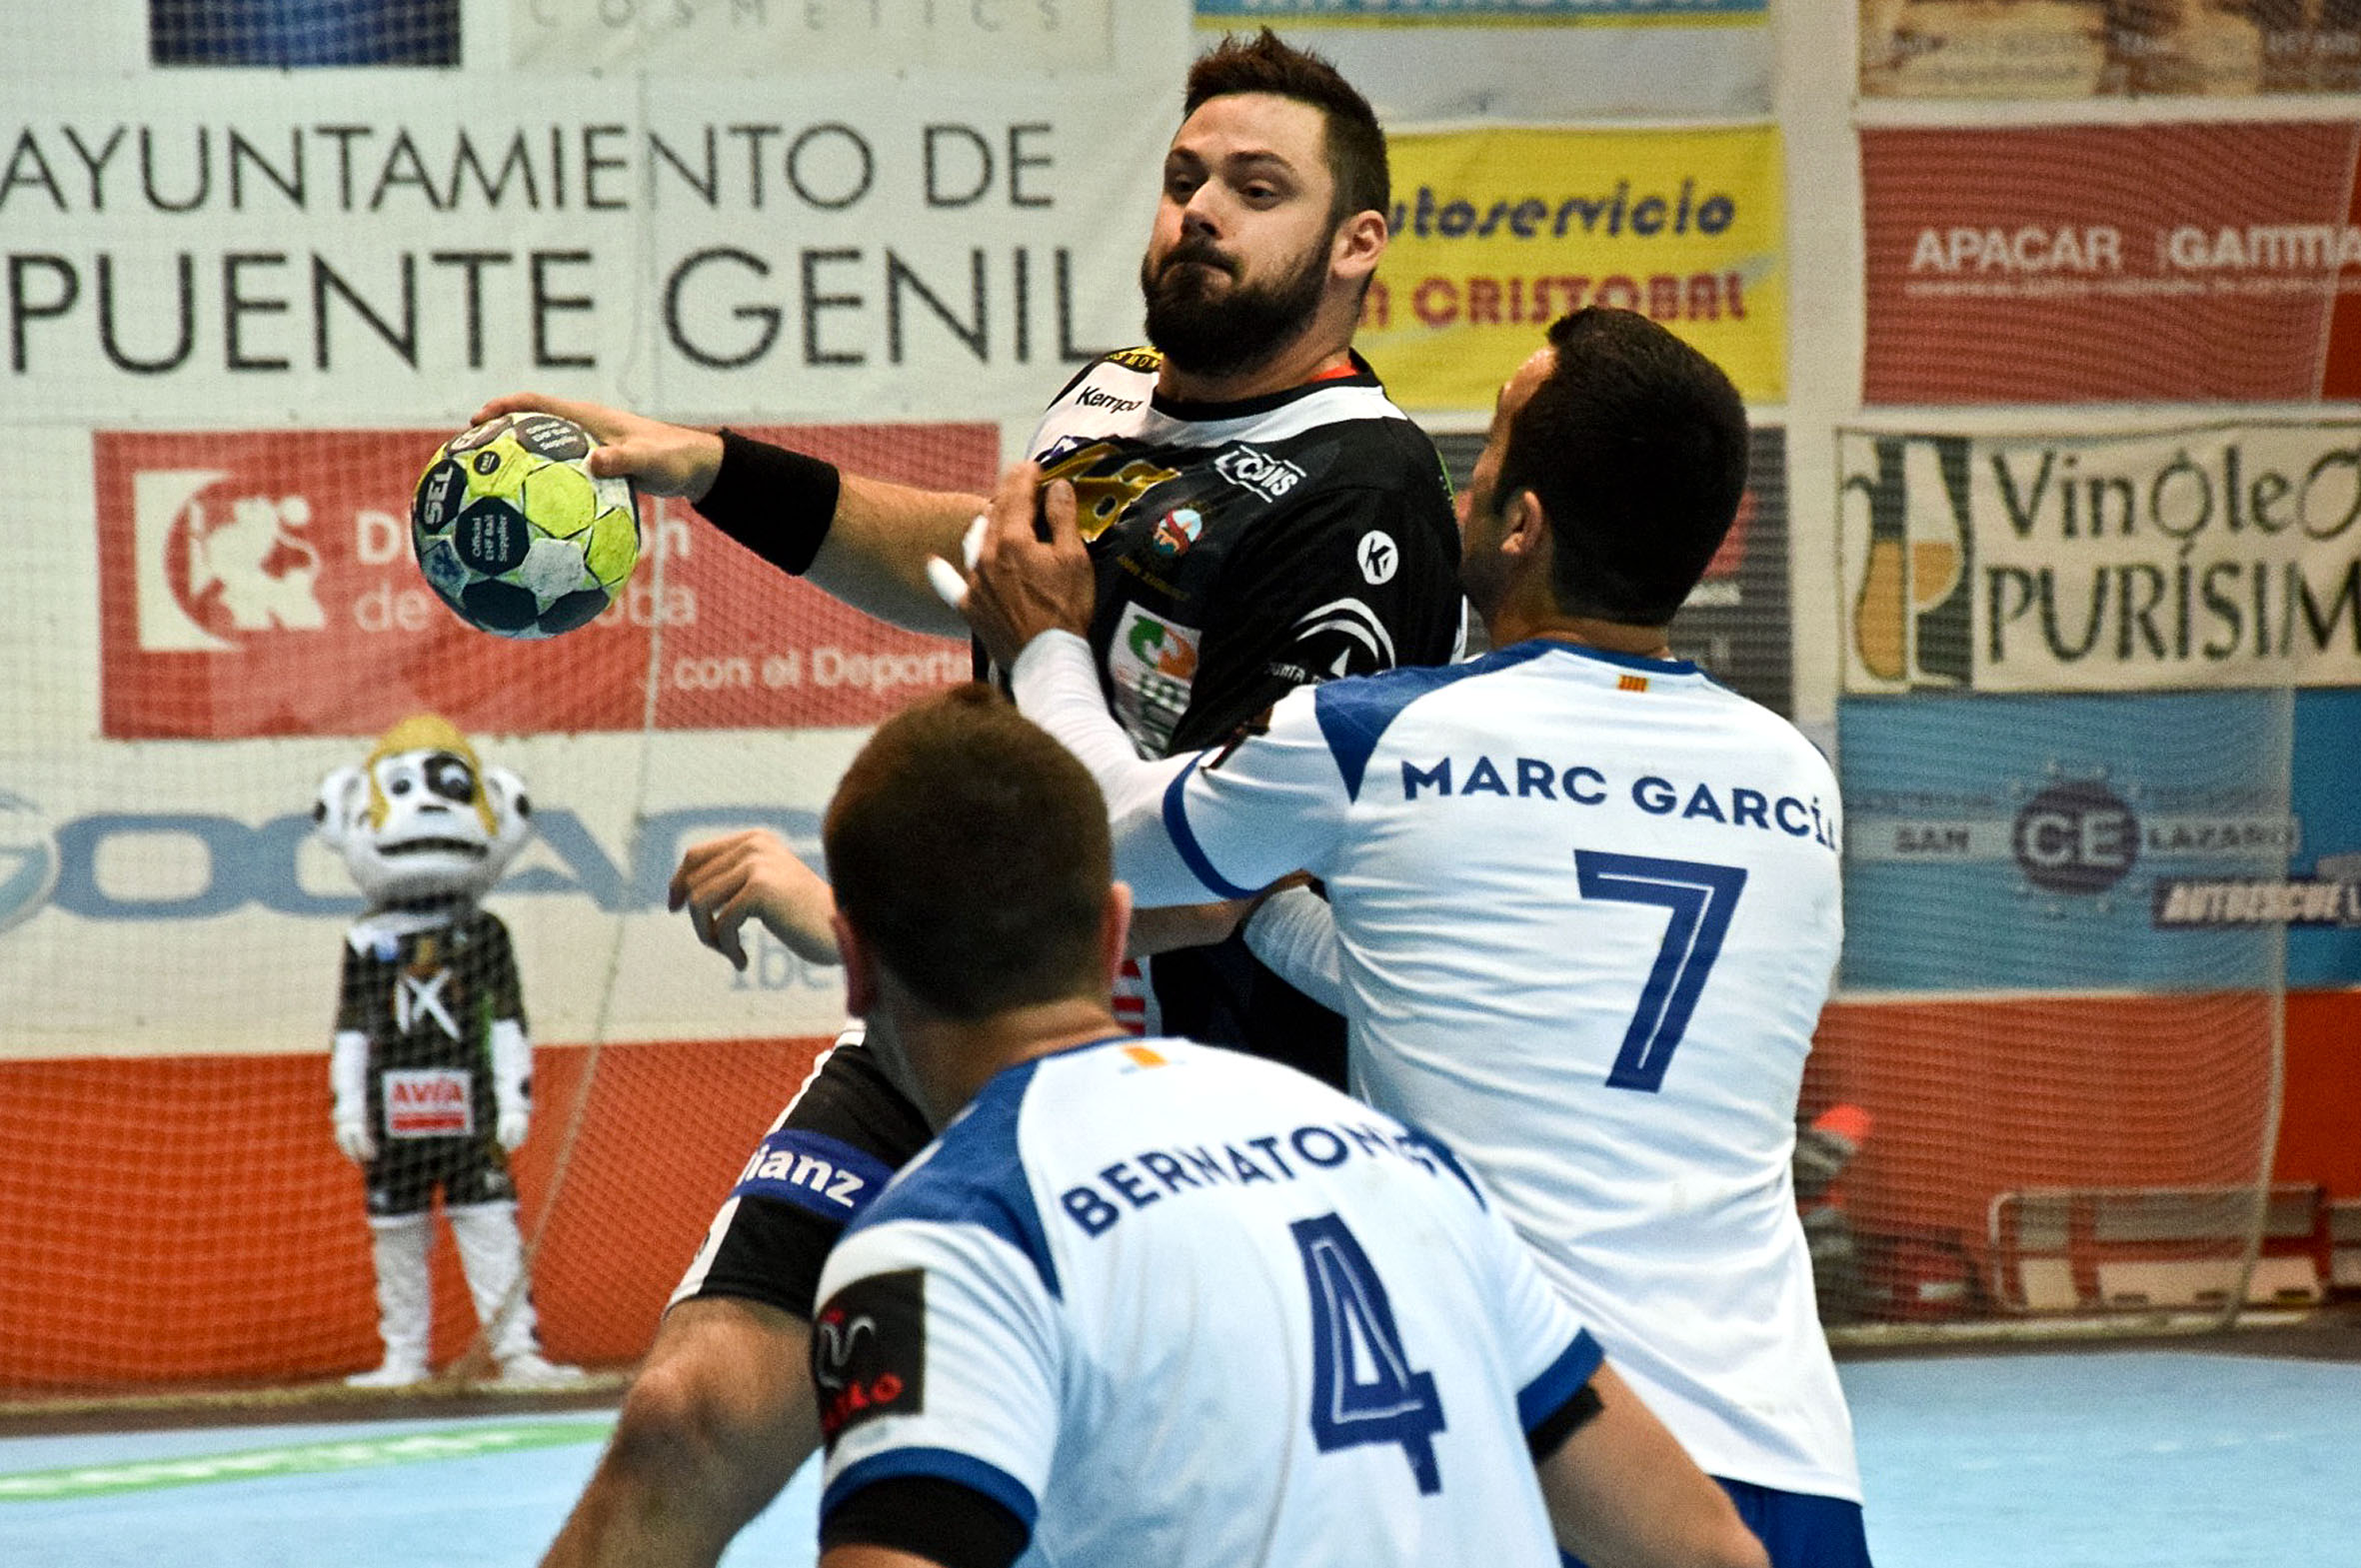 Marc Garcia intenta contenir Juanlu Moyano, autor de sis gols, en una acció del partit de dimecres